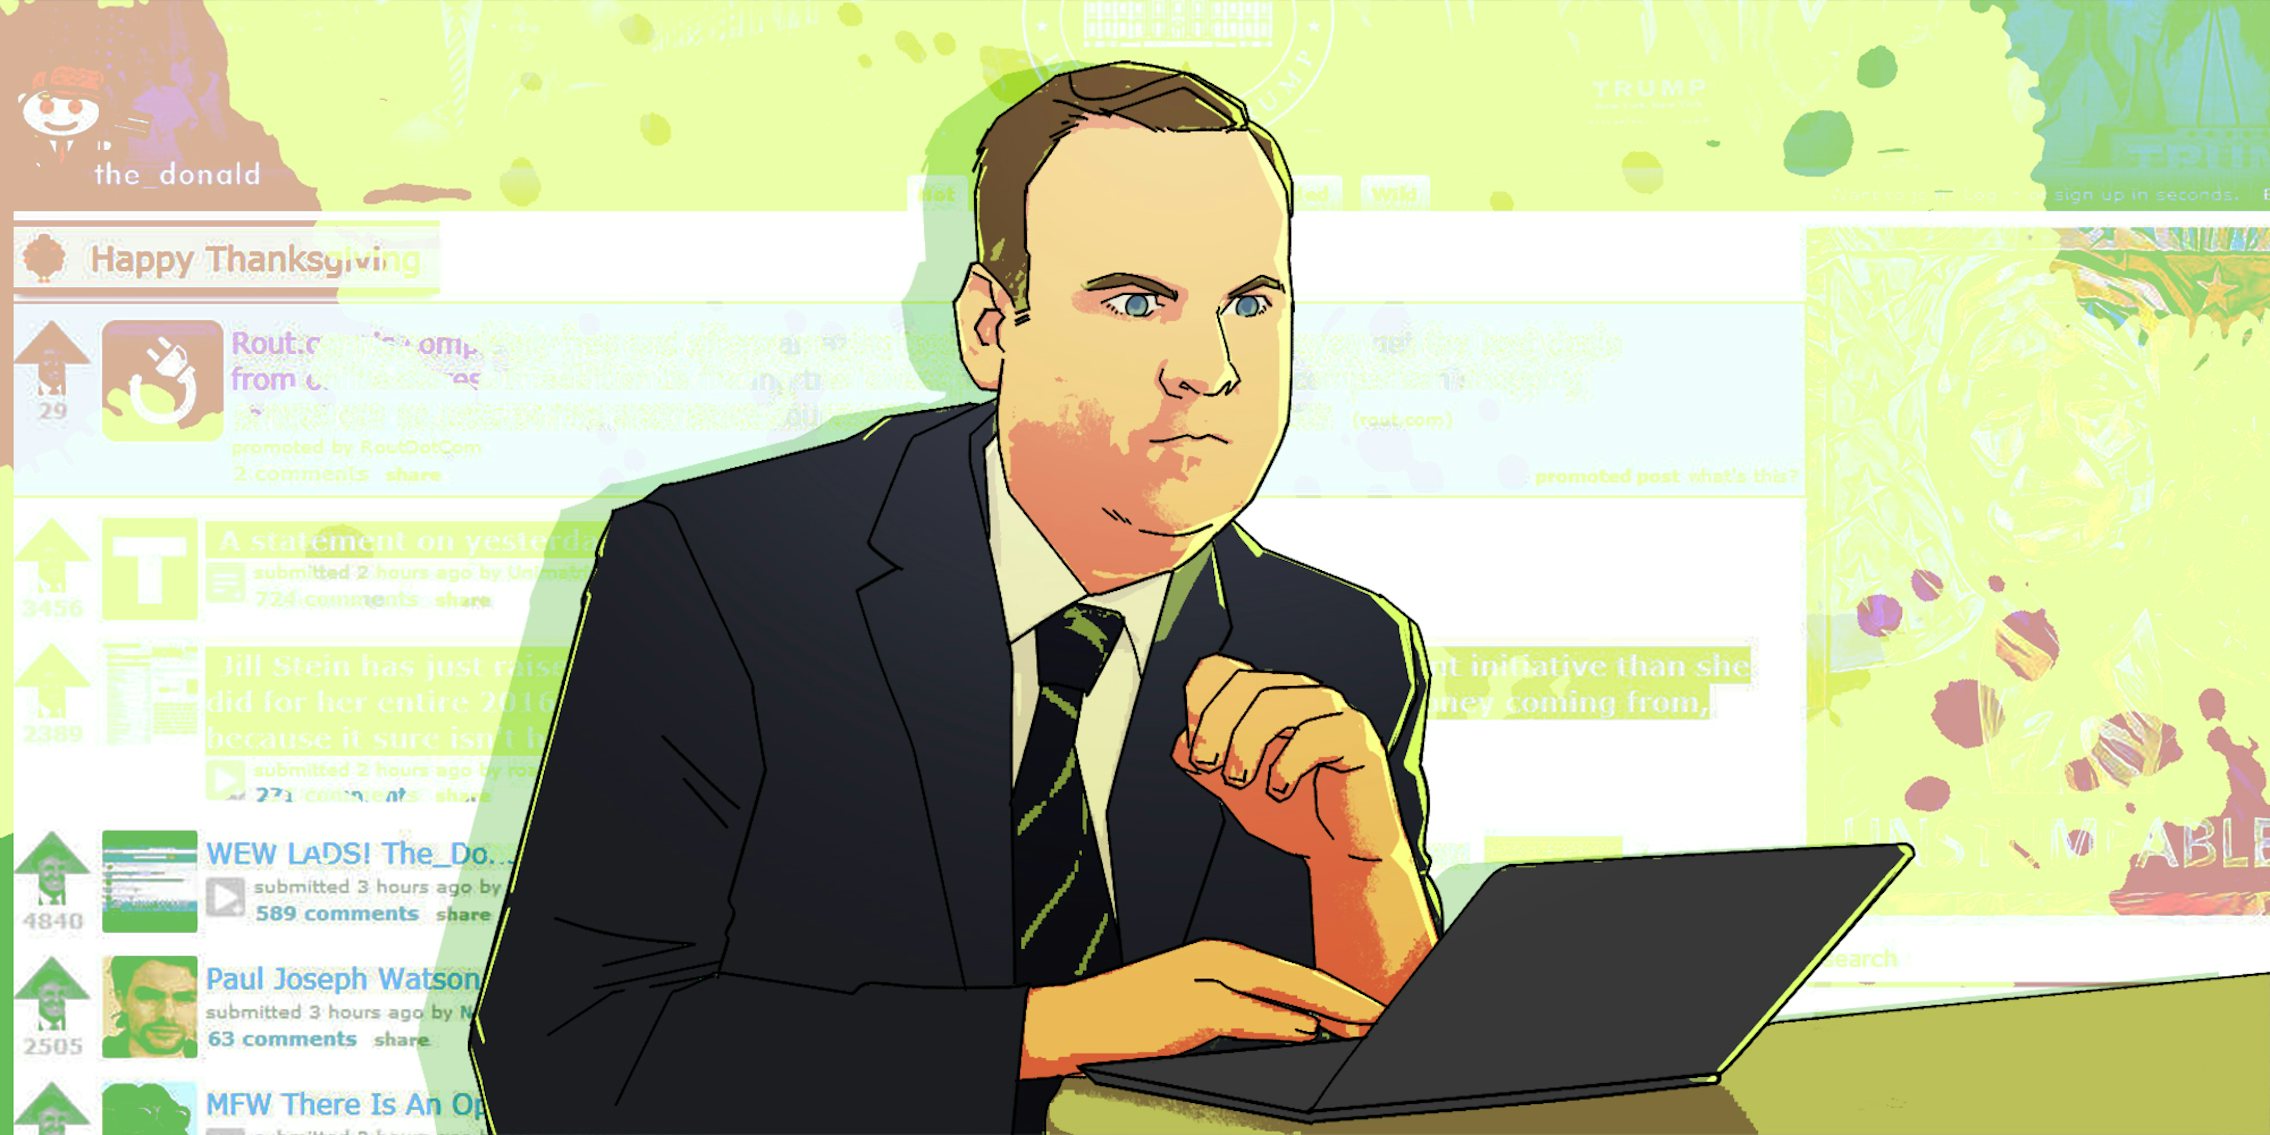 illustration of dan scavino at laptop over subreddit 'the donald' background